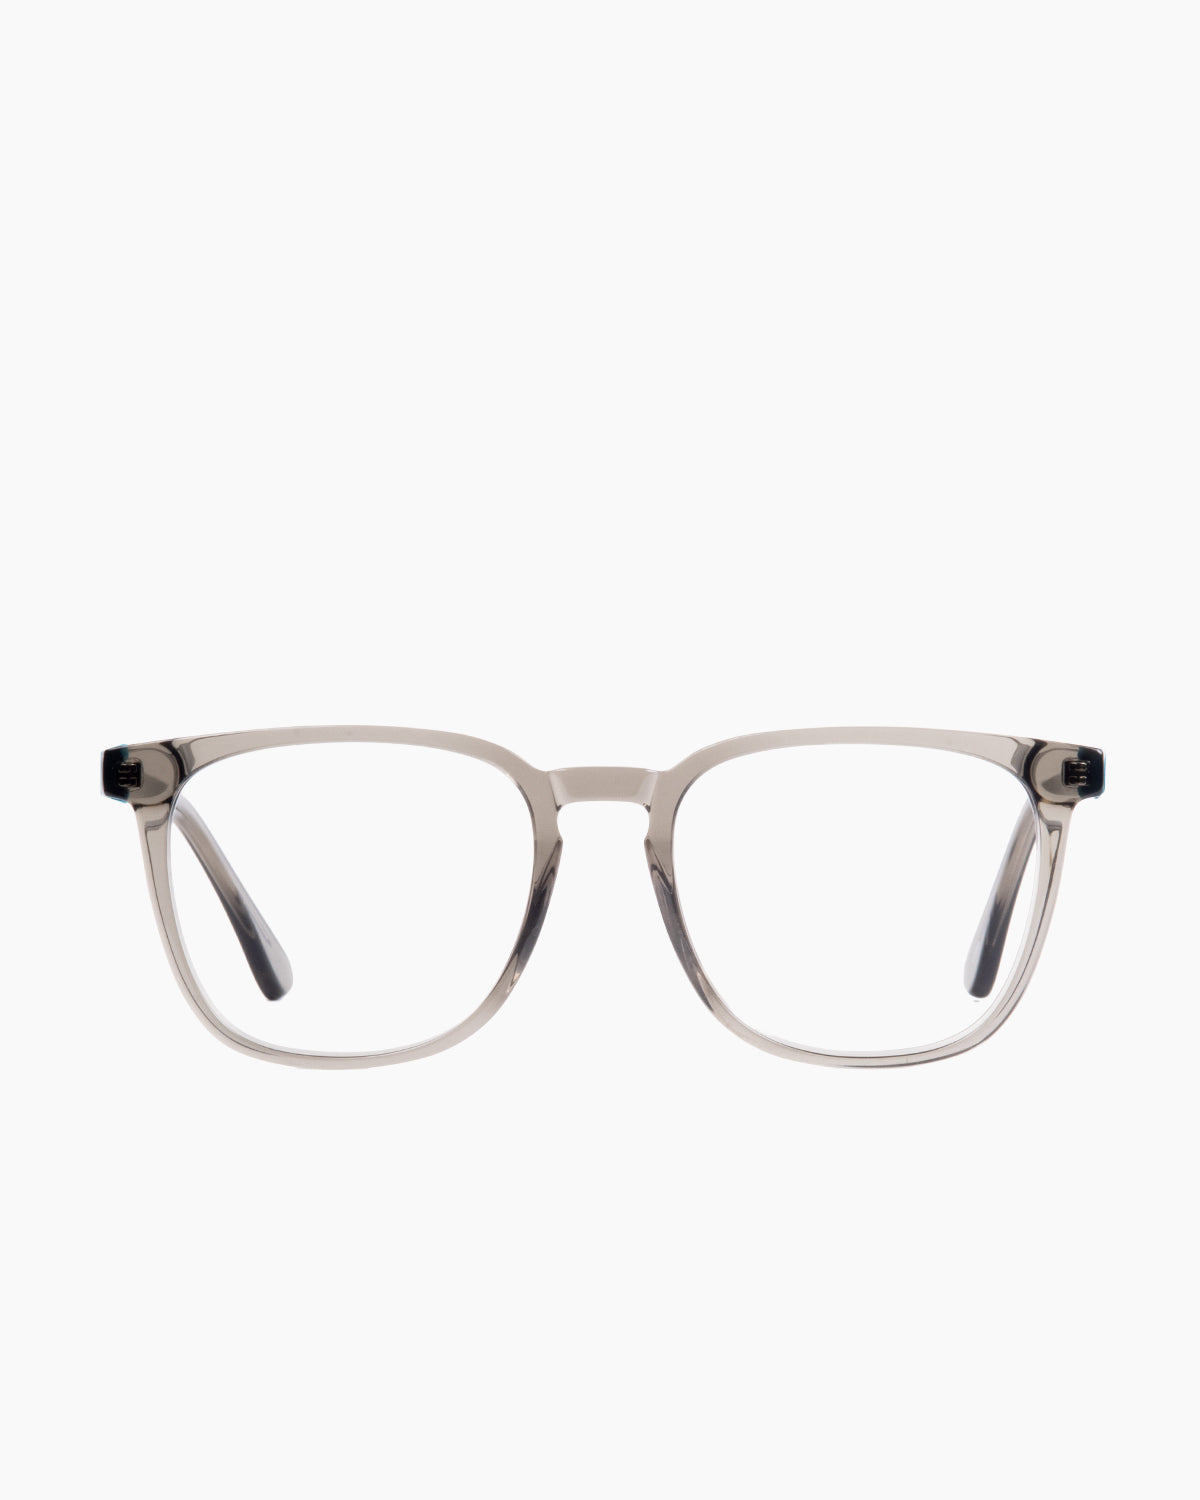 Evolve - Rob - 13 | Bar à lunettes:  Marie-Sophie Dion